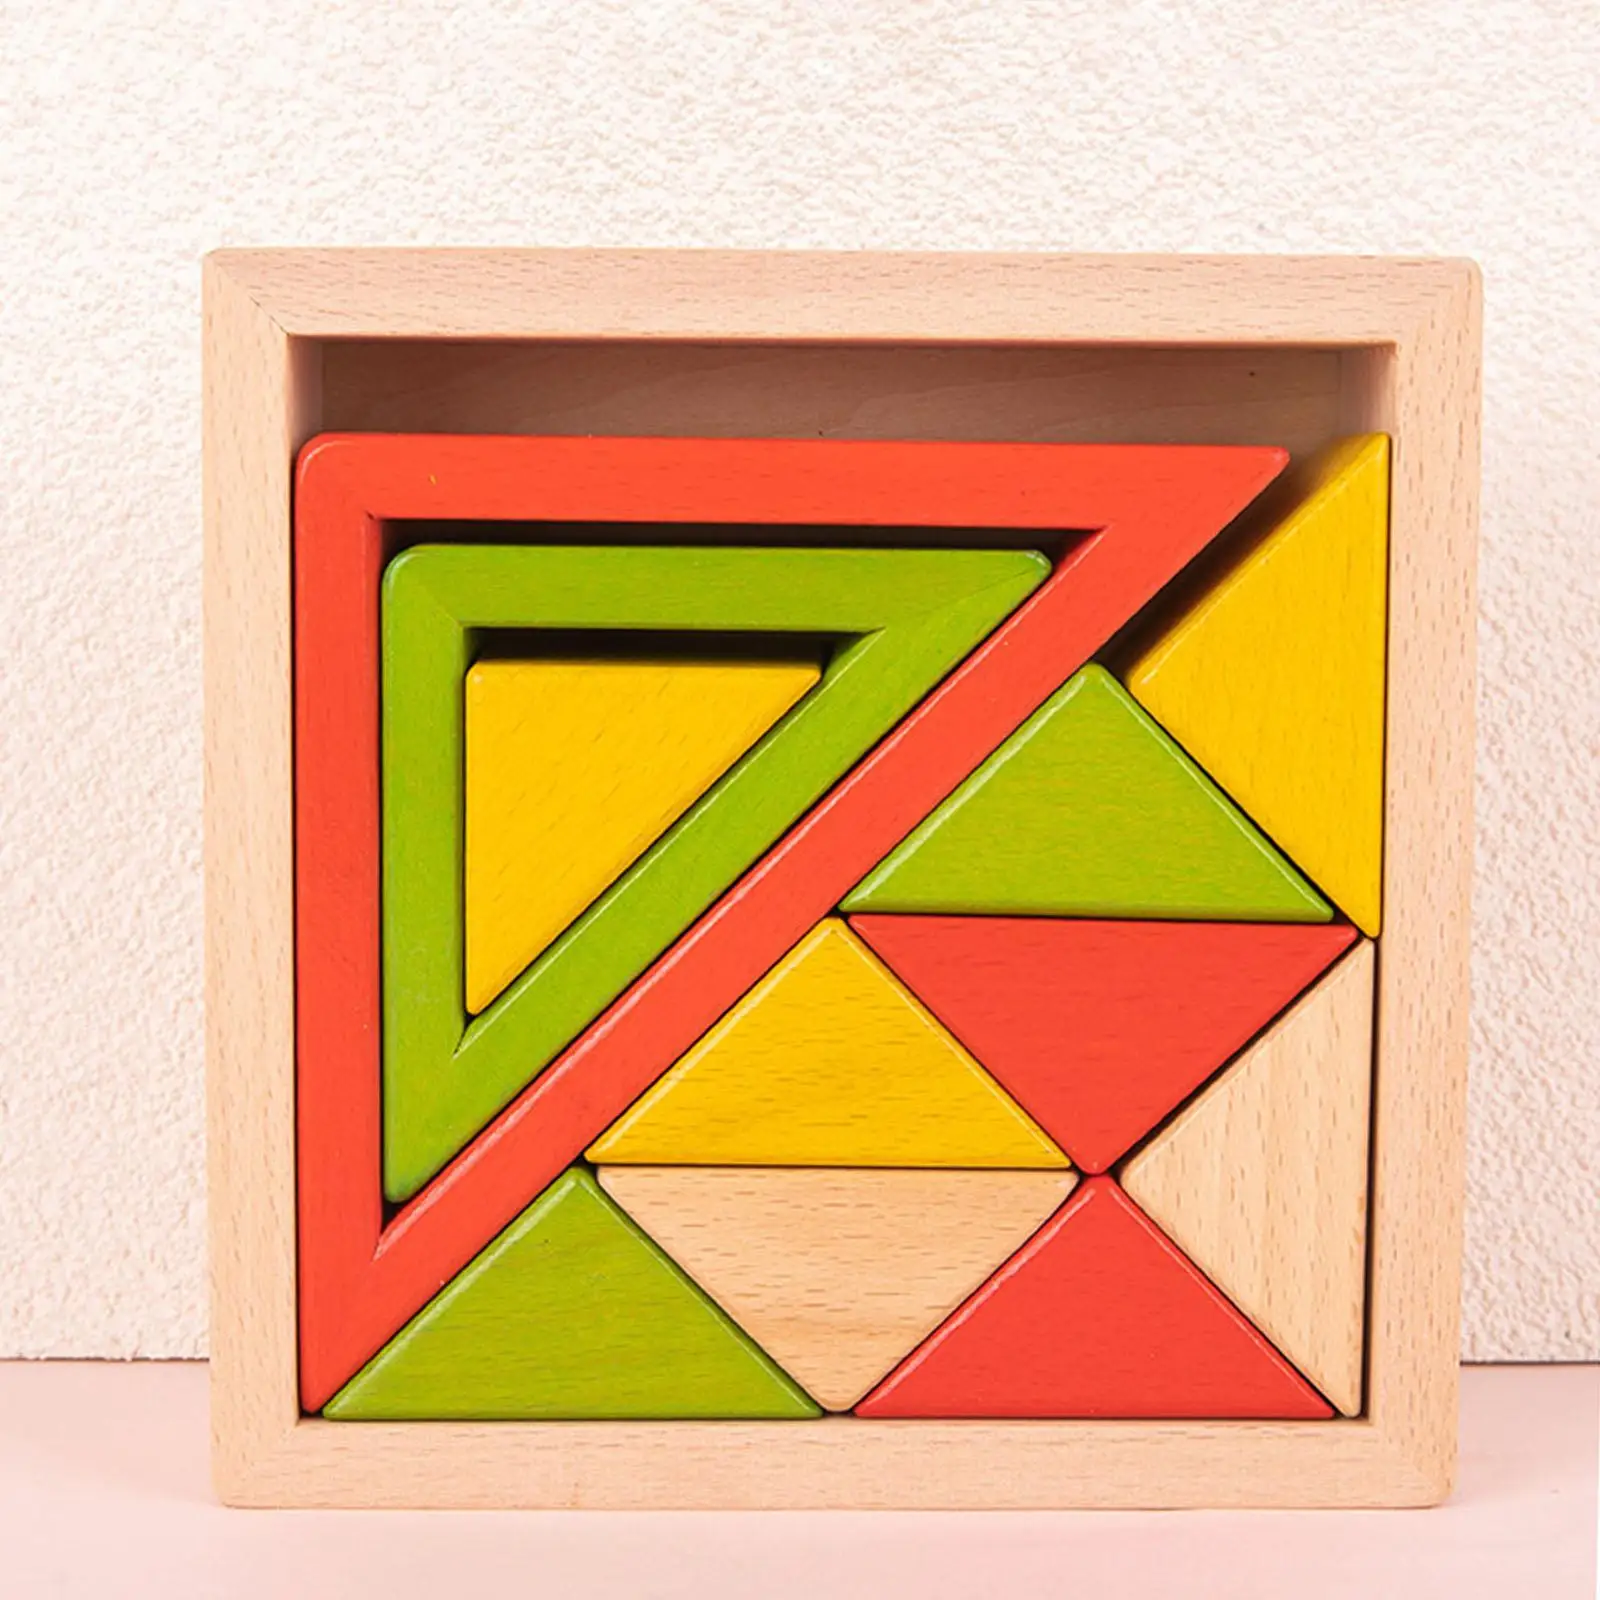 Creative Wooden Stacker Nesting Puzzle Blocks Montessori Early Development Building Blocks Educational Toys for Children Kids